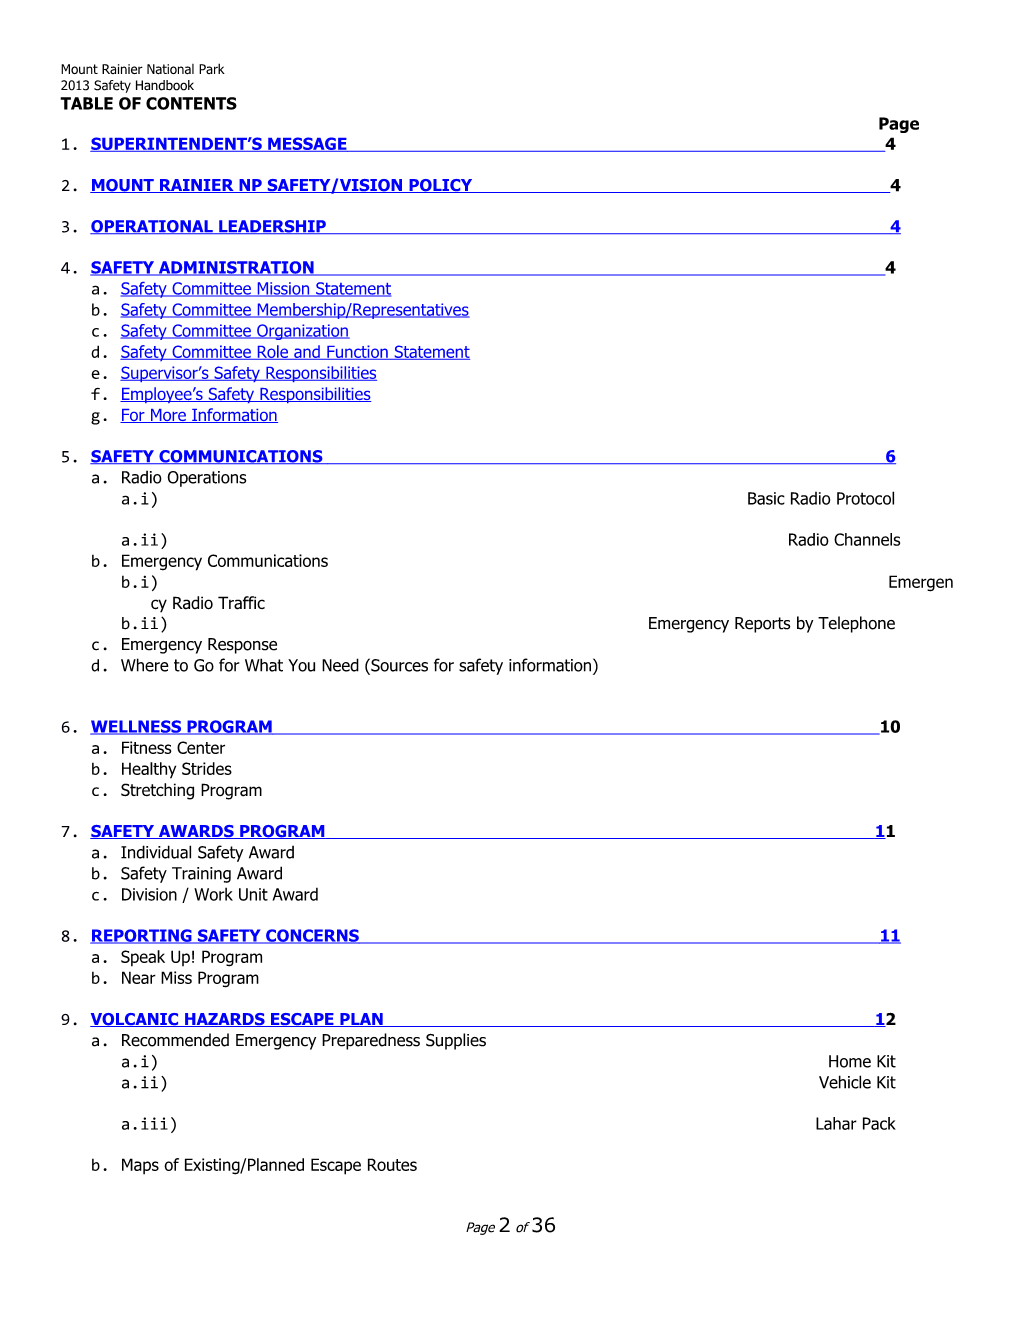 Mount Rainier Employee Safety And Wellness Handbook